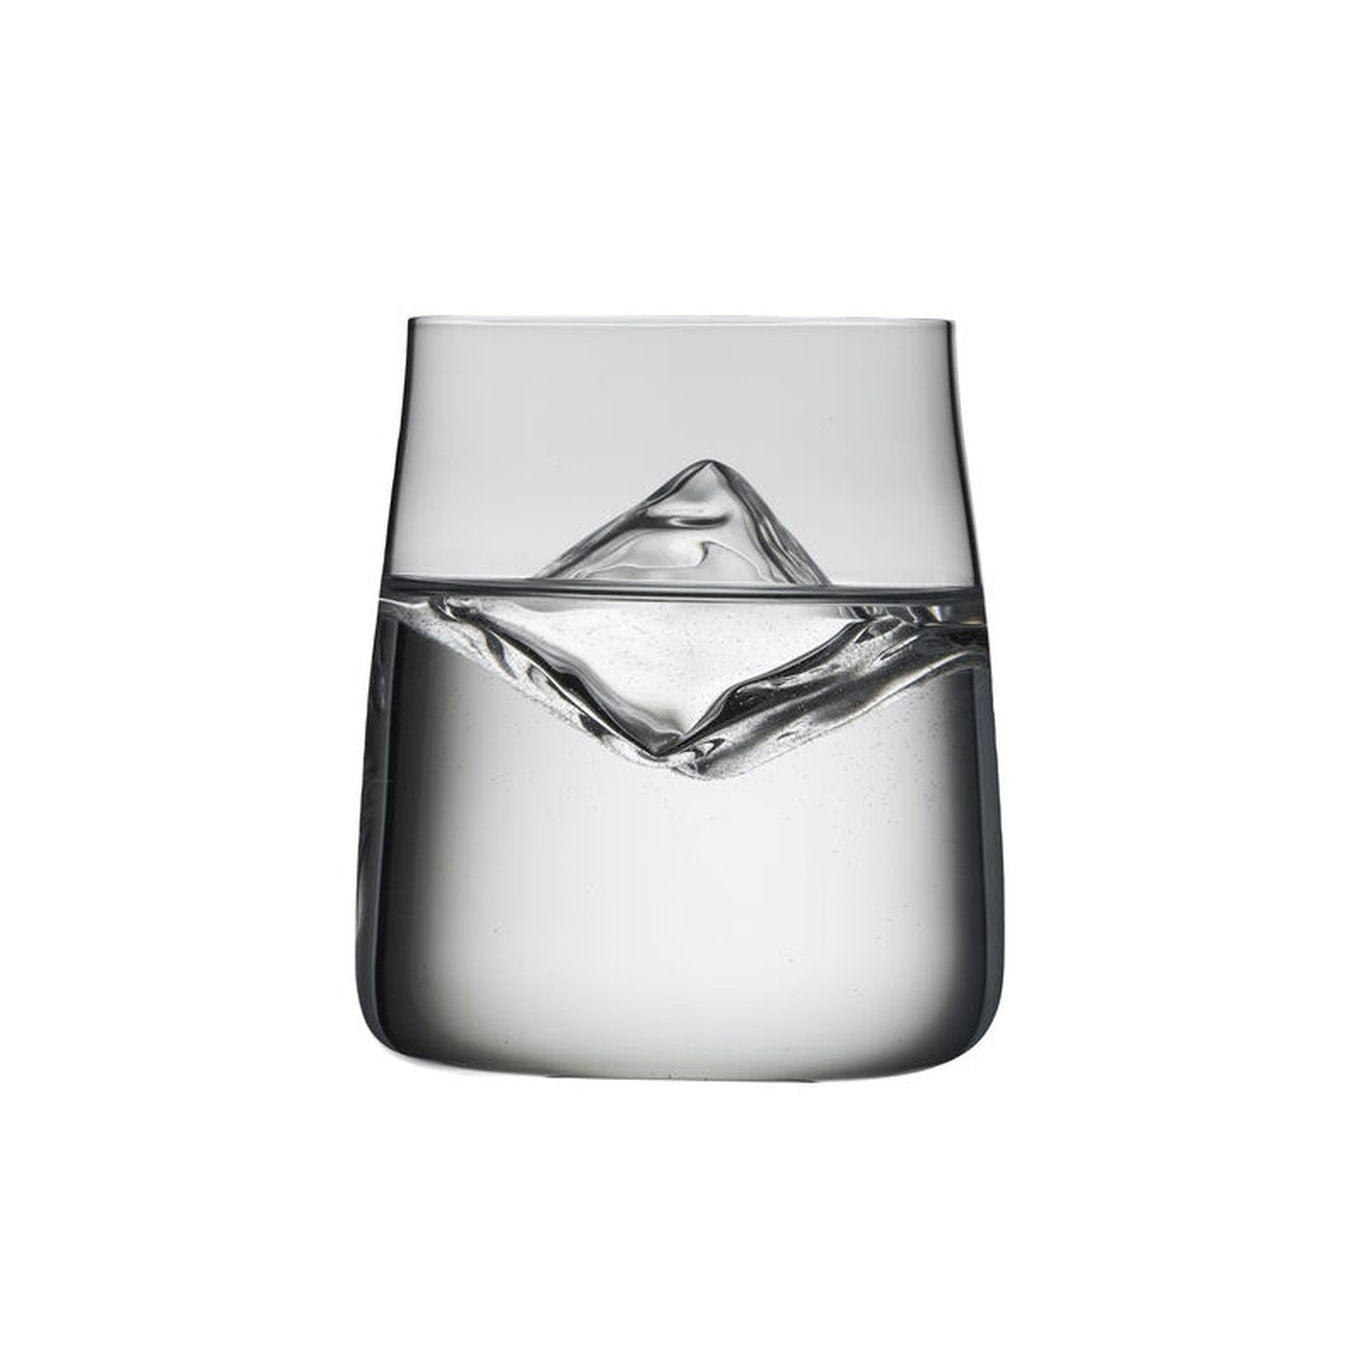 Lyngby Glas Zero Krystal Water Glass 42 CL, 6 pezzi.